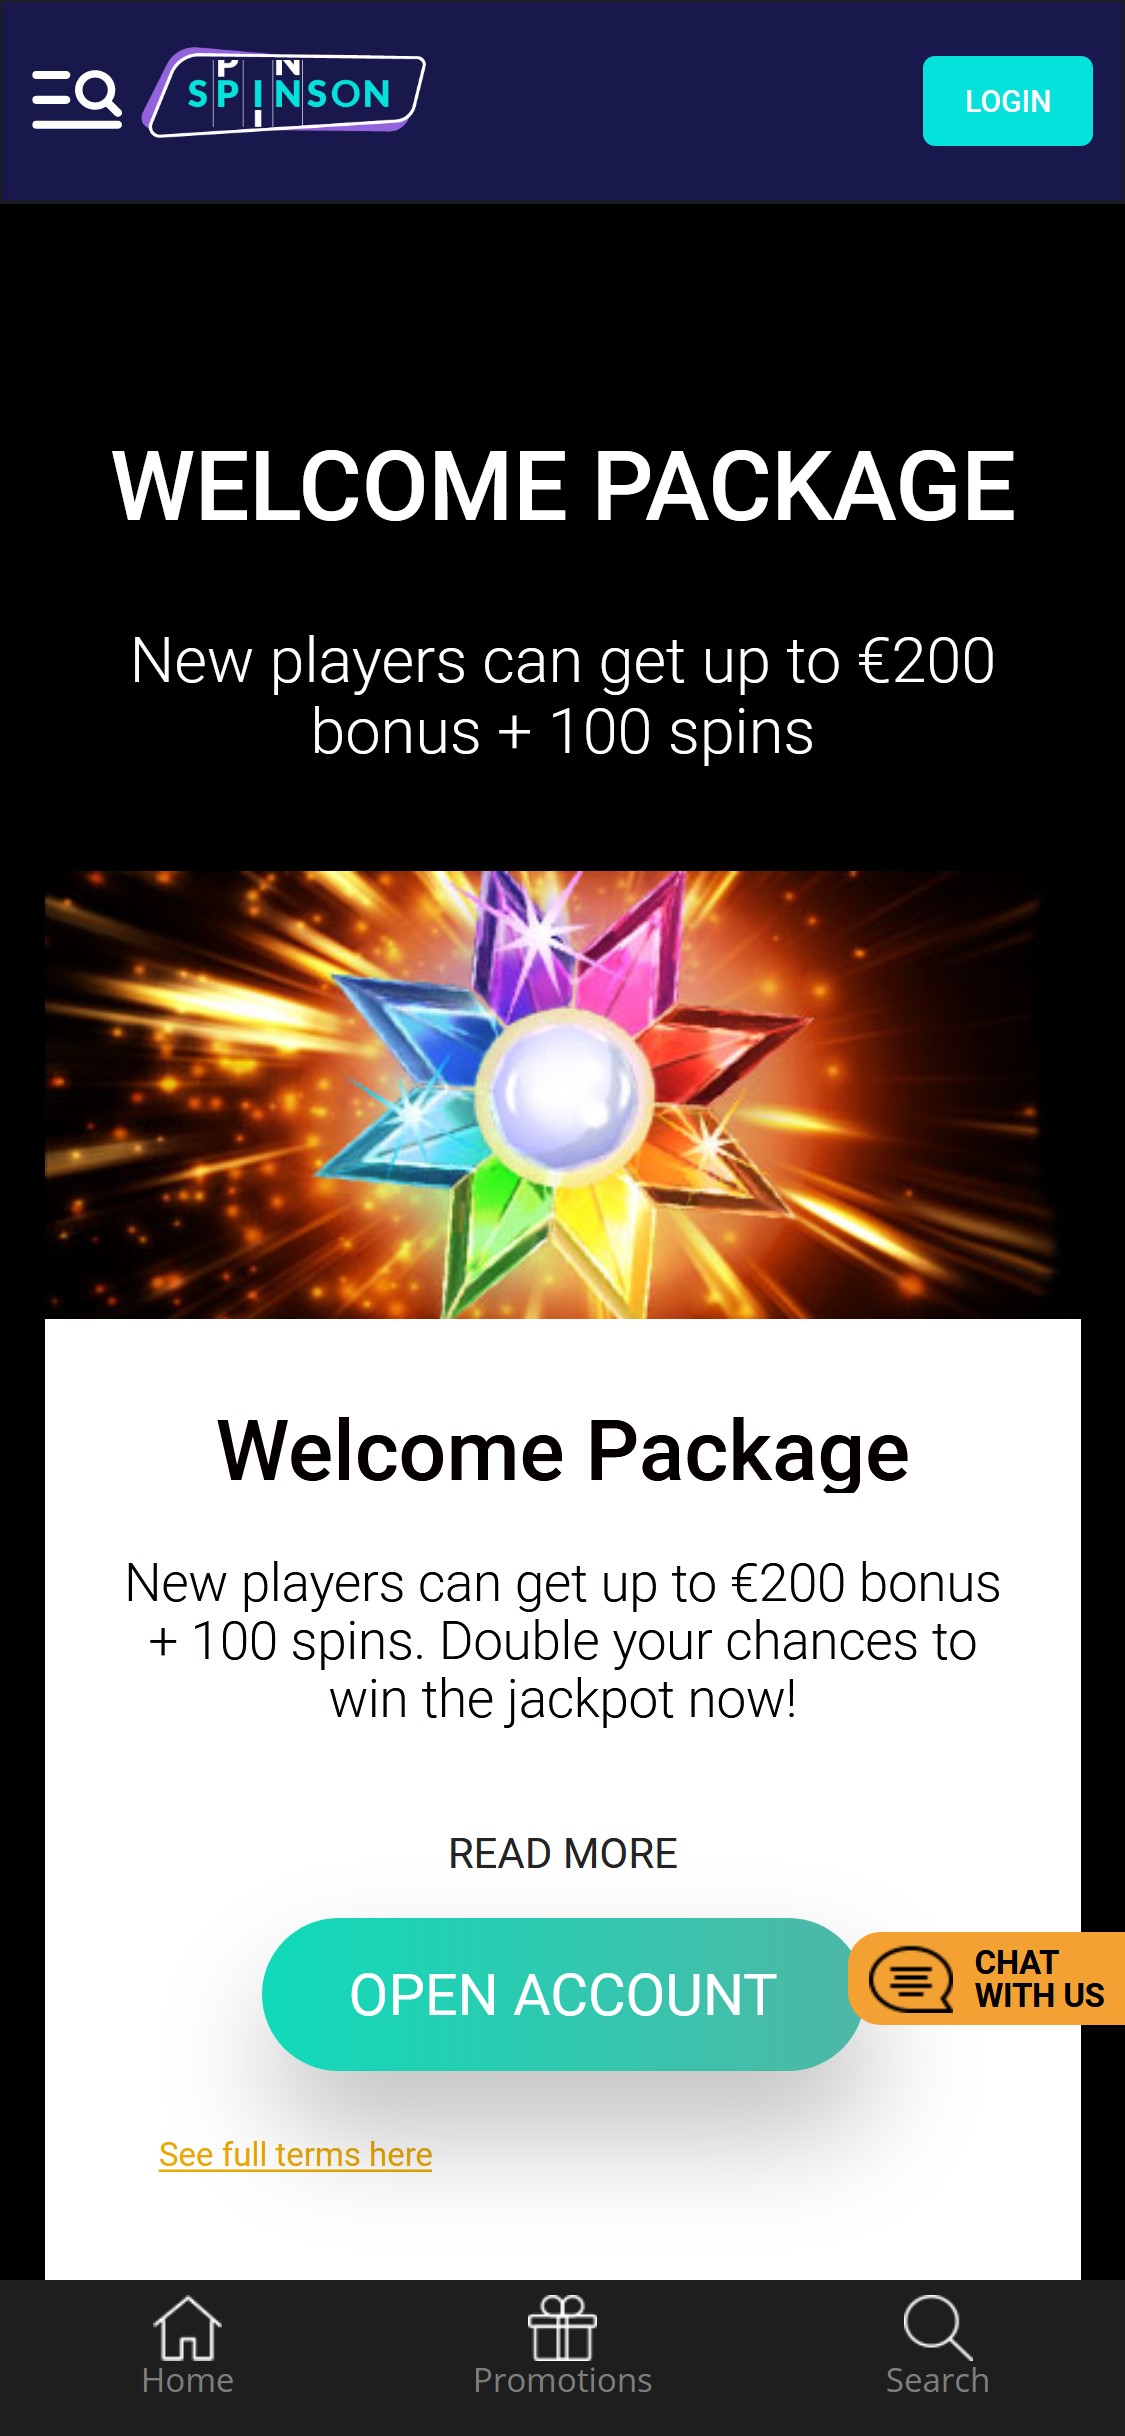 Spinson Casino Mobile No Deposit Bonus Review